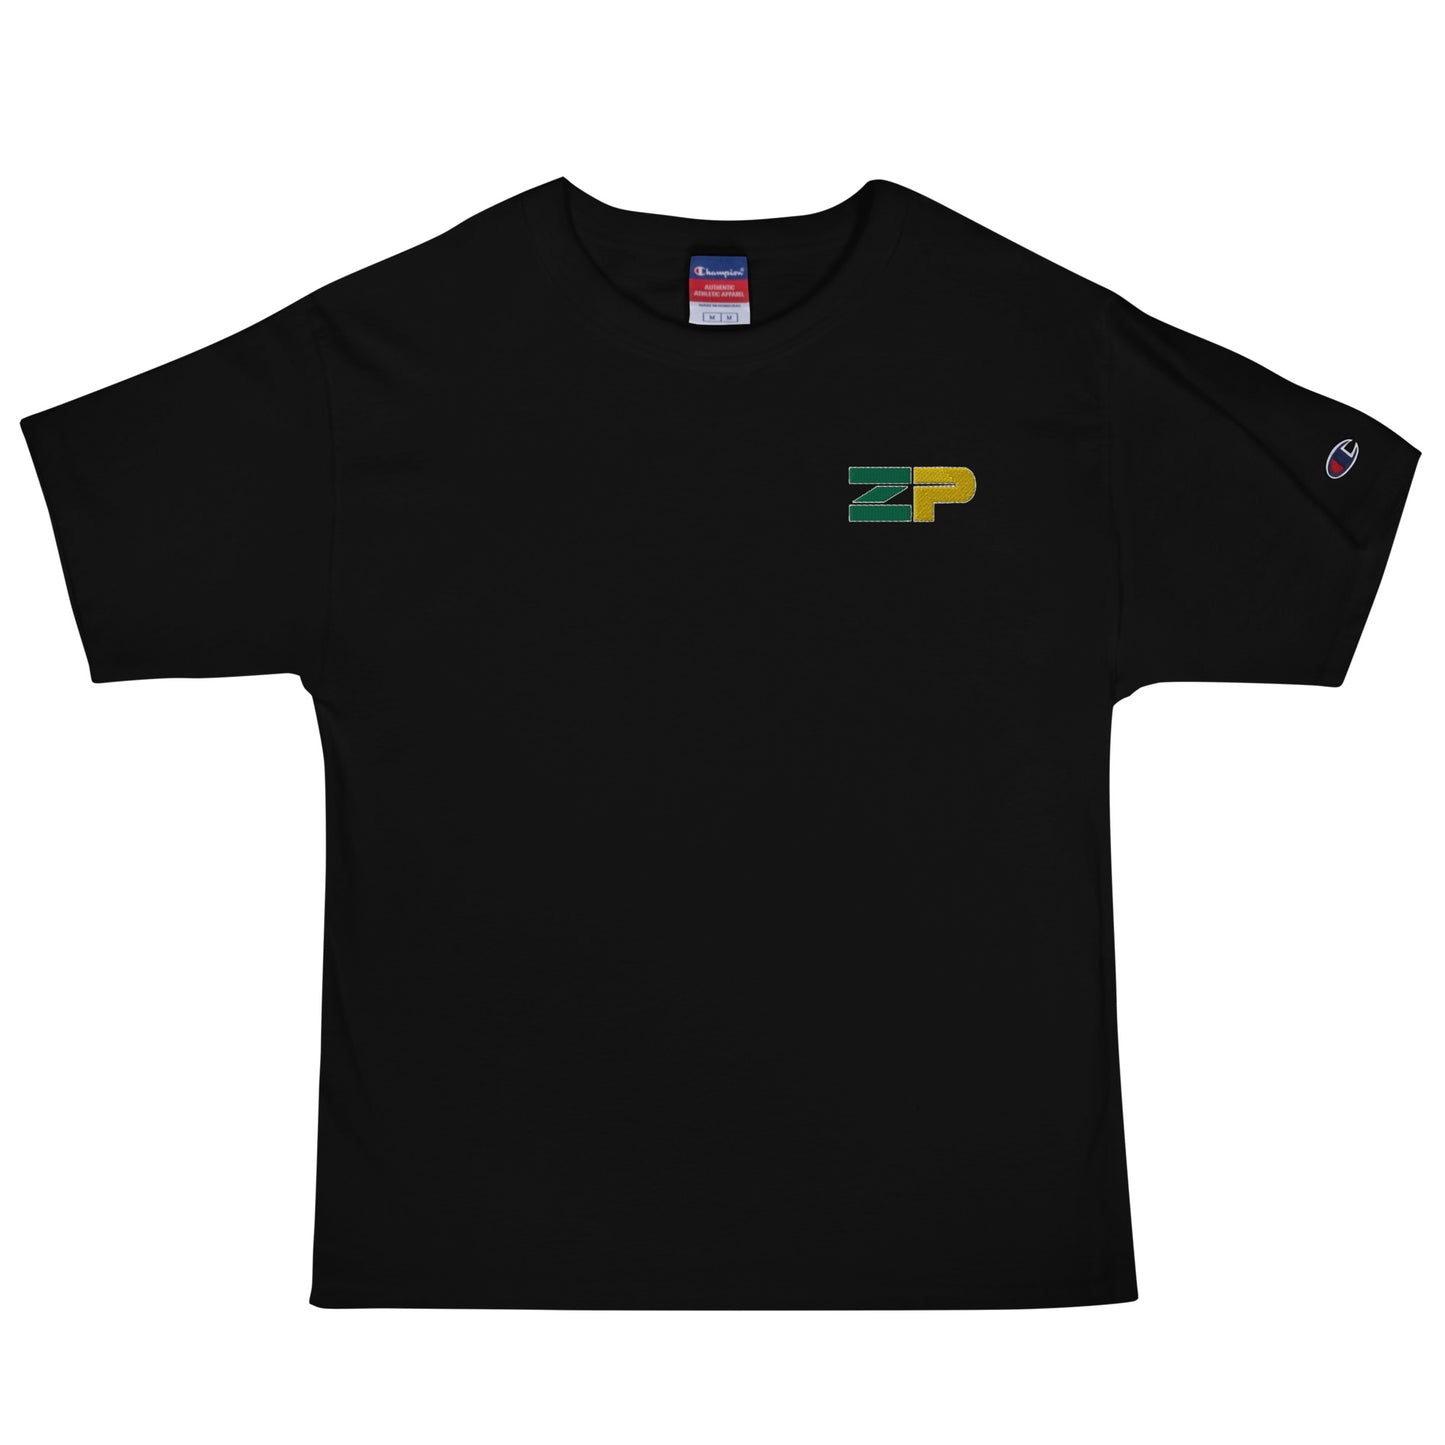 ZP Embroidered Men's Champion T-Shirt